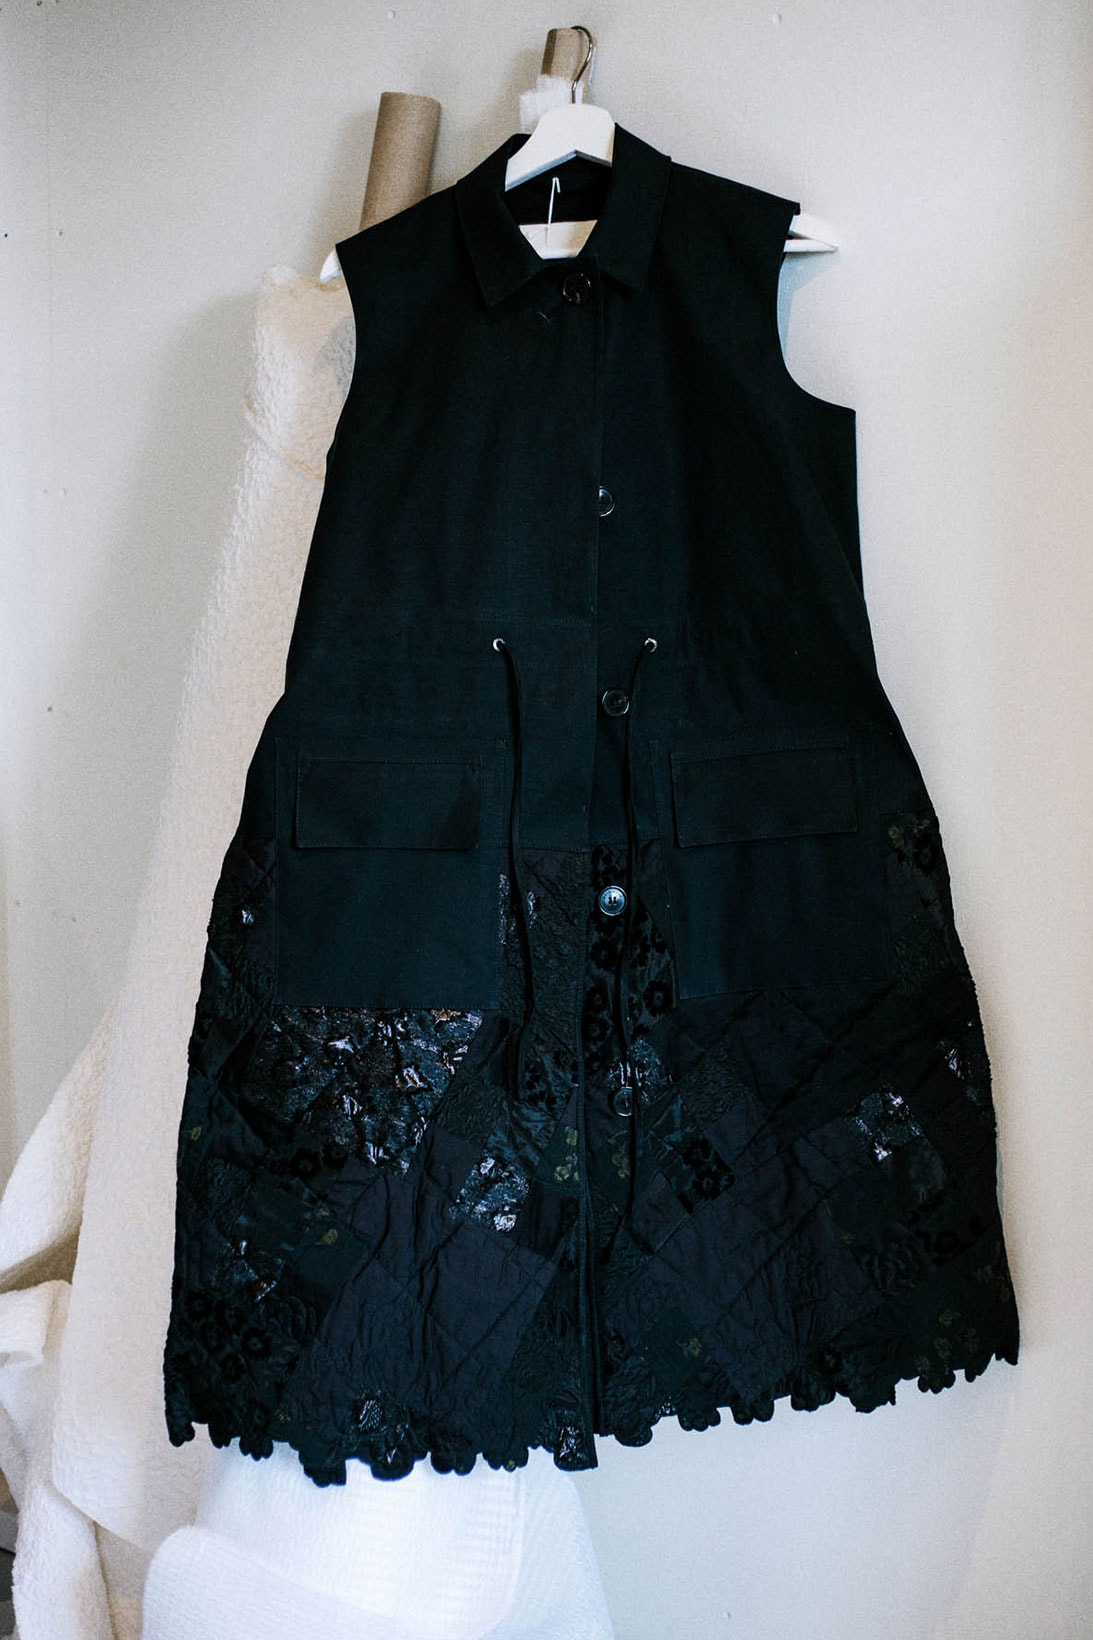 mackintosh cecilie bahnsen collaboration hanger black quilted dress pattern